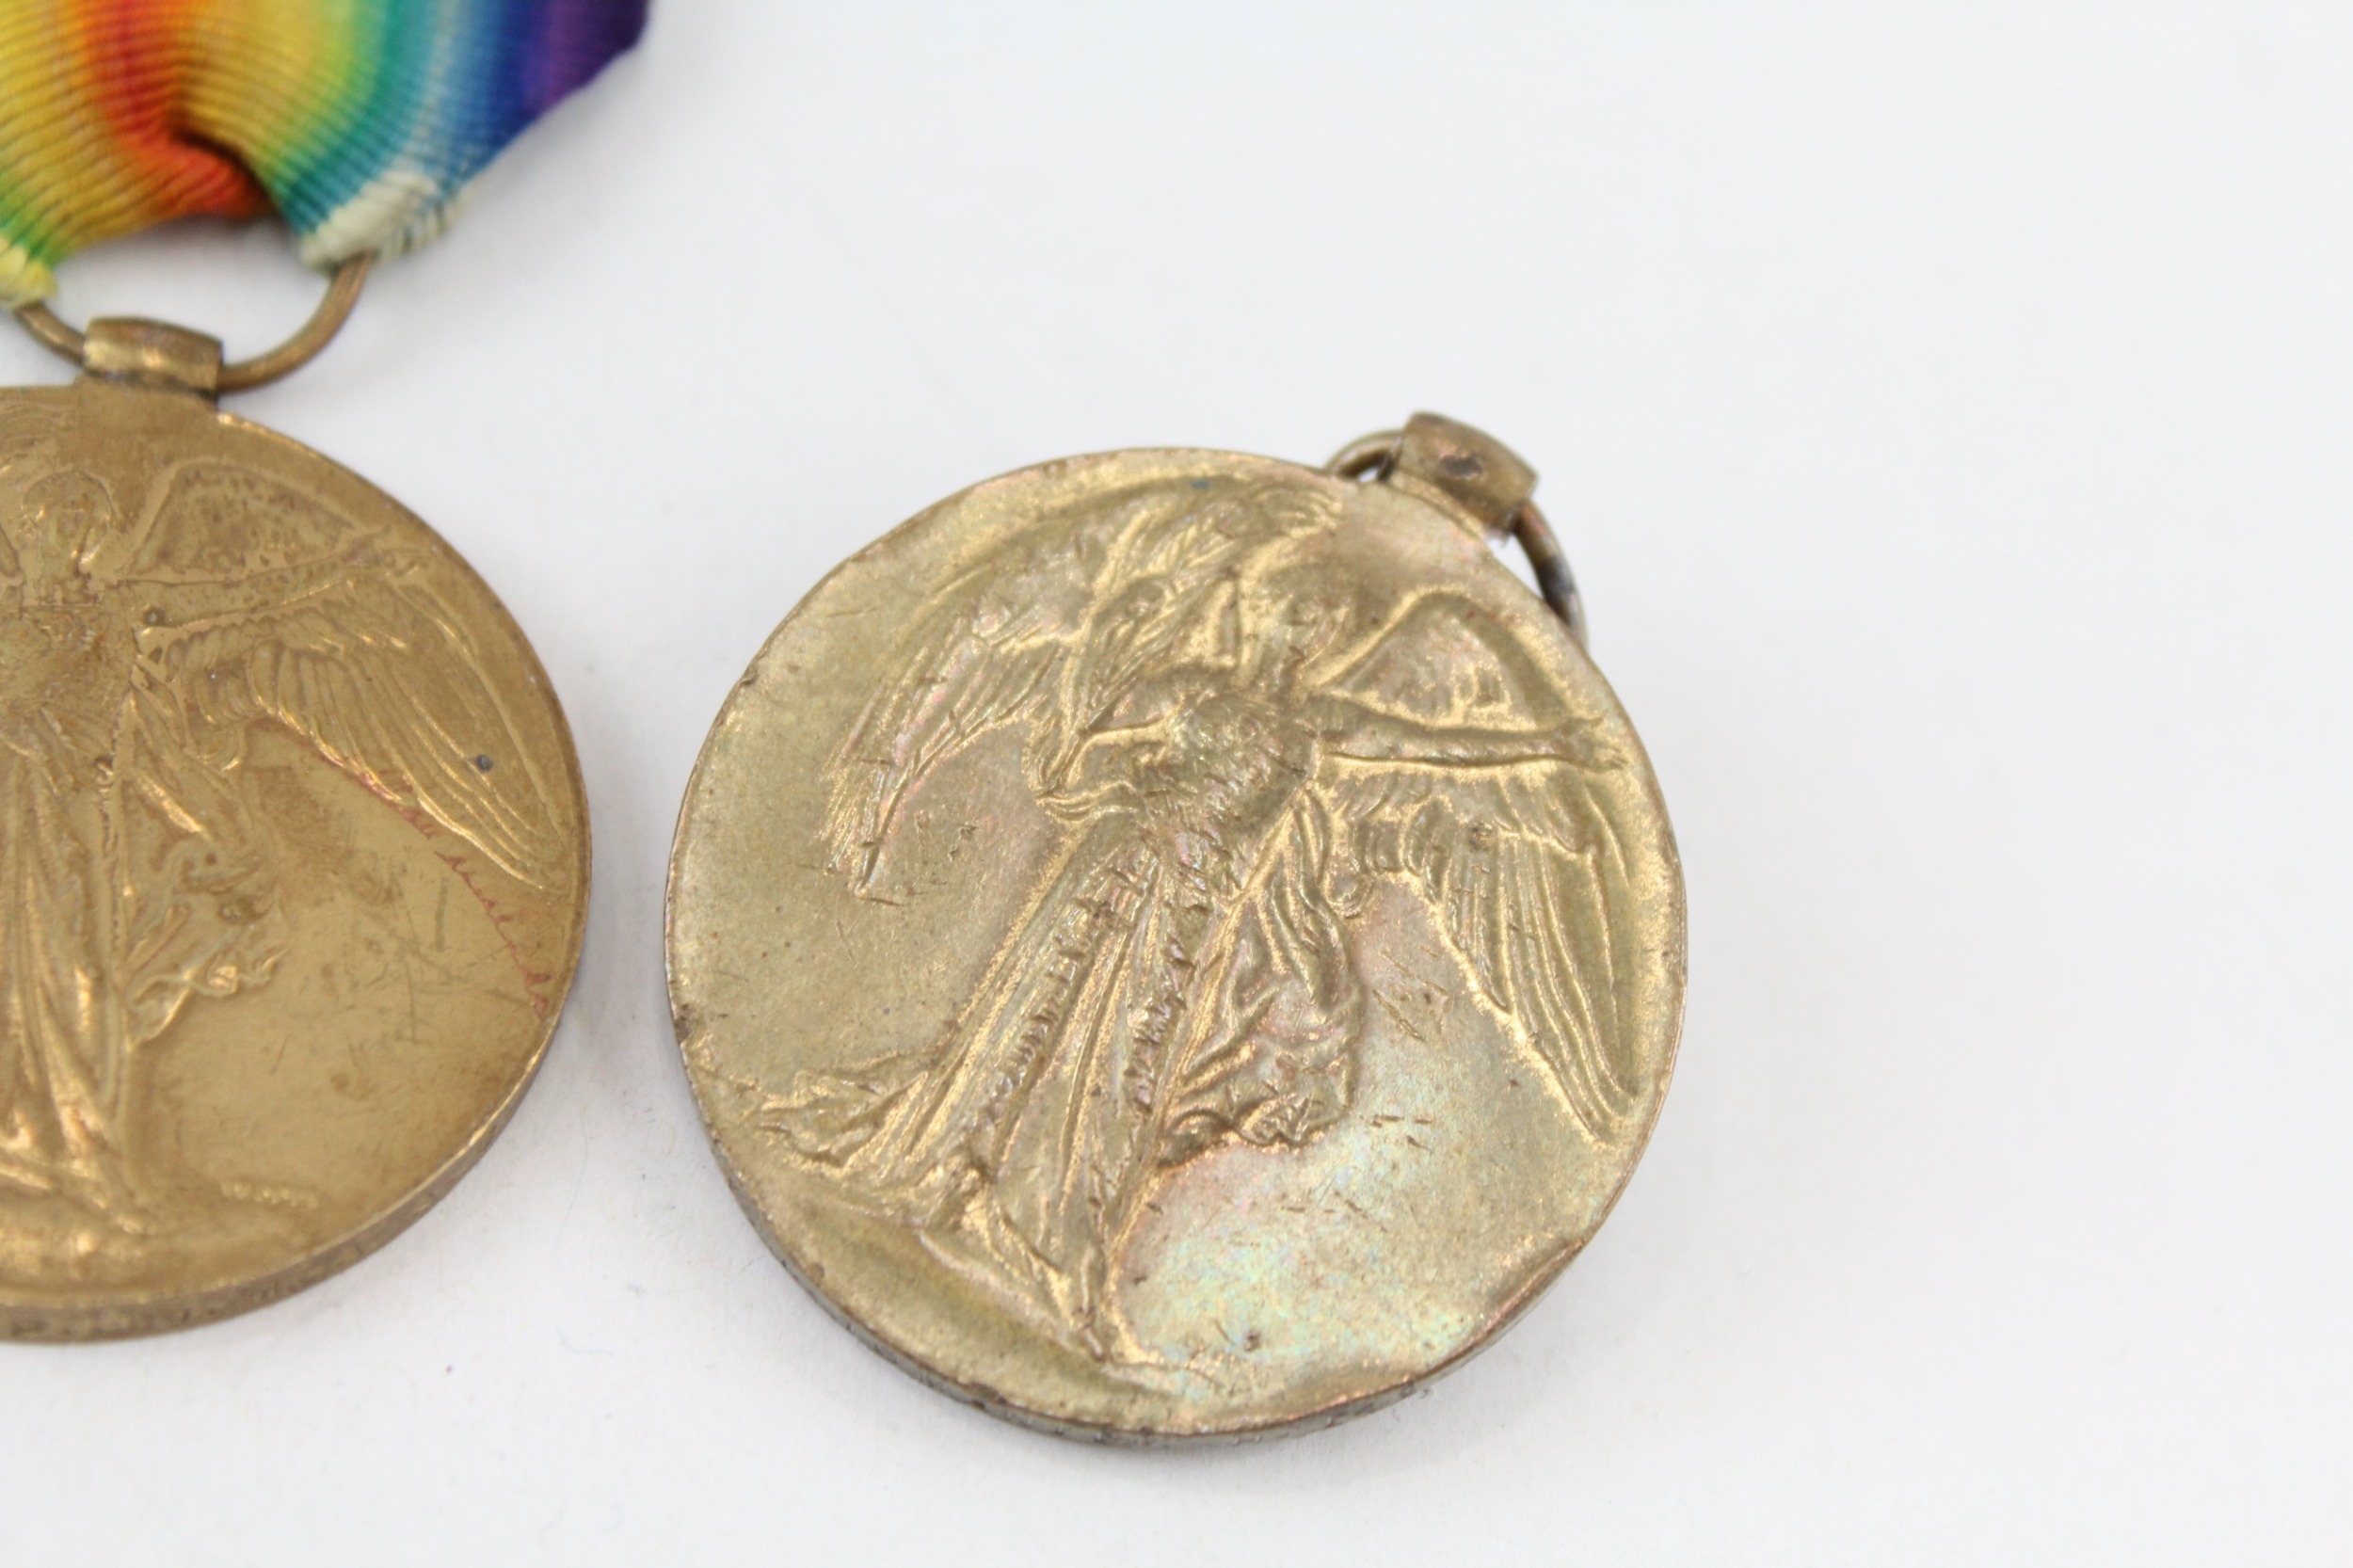 WW1 Medals x 4 Named Wr 4660 Cpl H.Worthy D.L.I M2 020272 Pte. A. Wright - Image 2 of 6